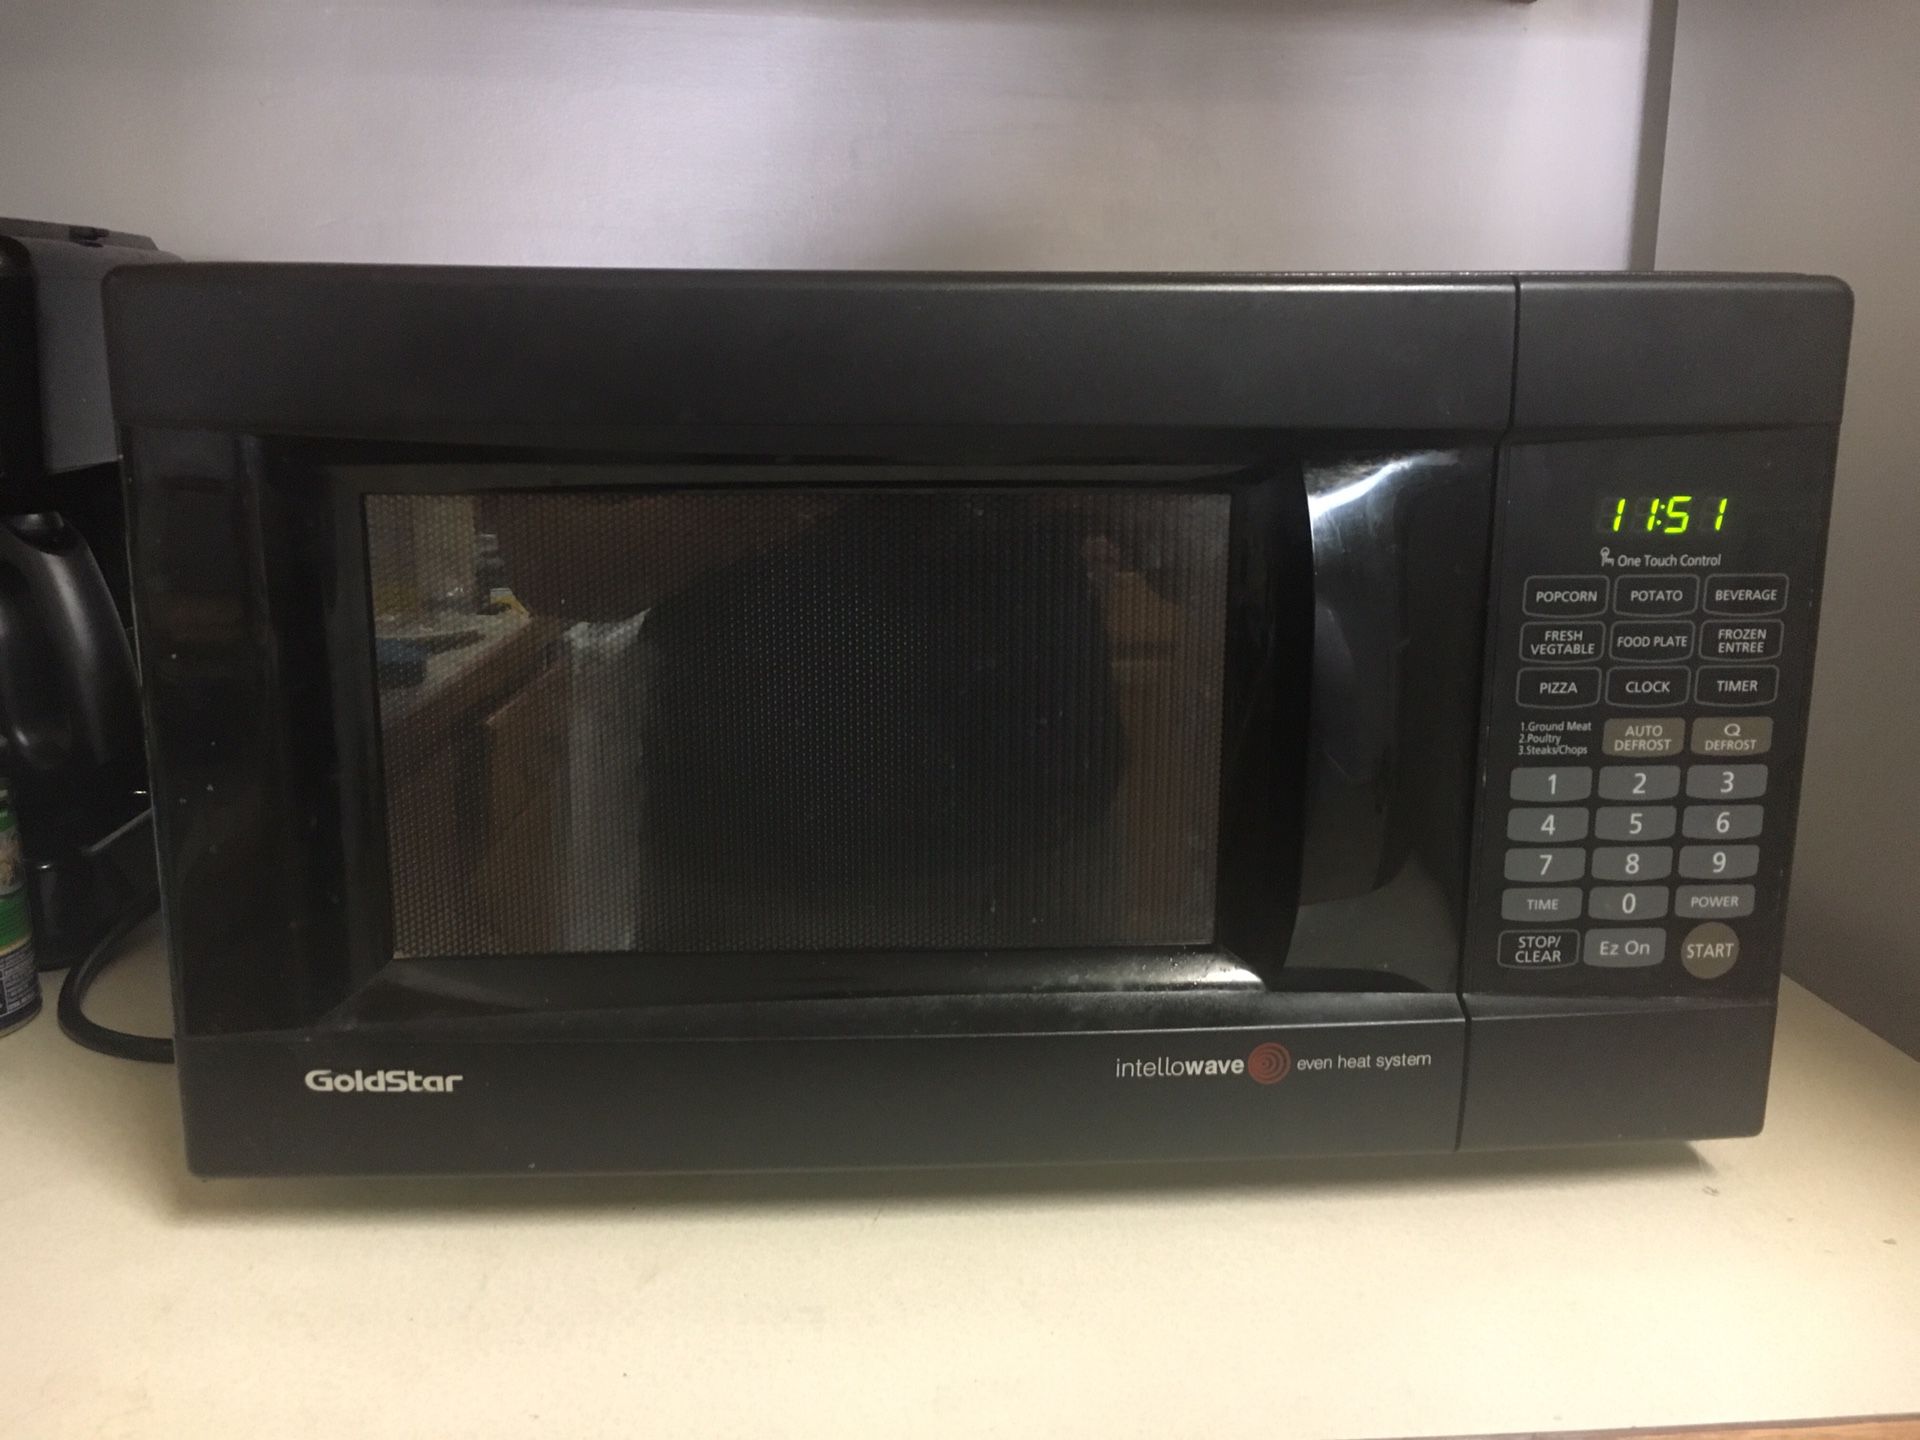 Black Microwave - Goldstar Intellowave Even Heat System